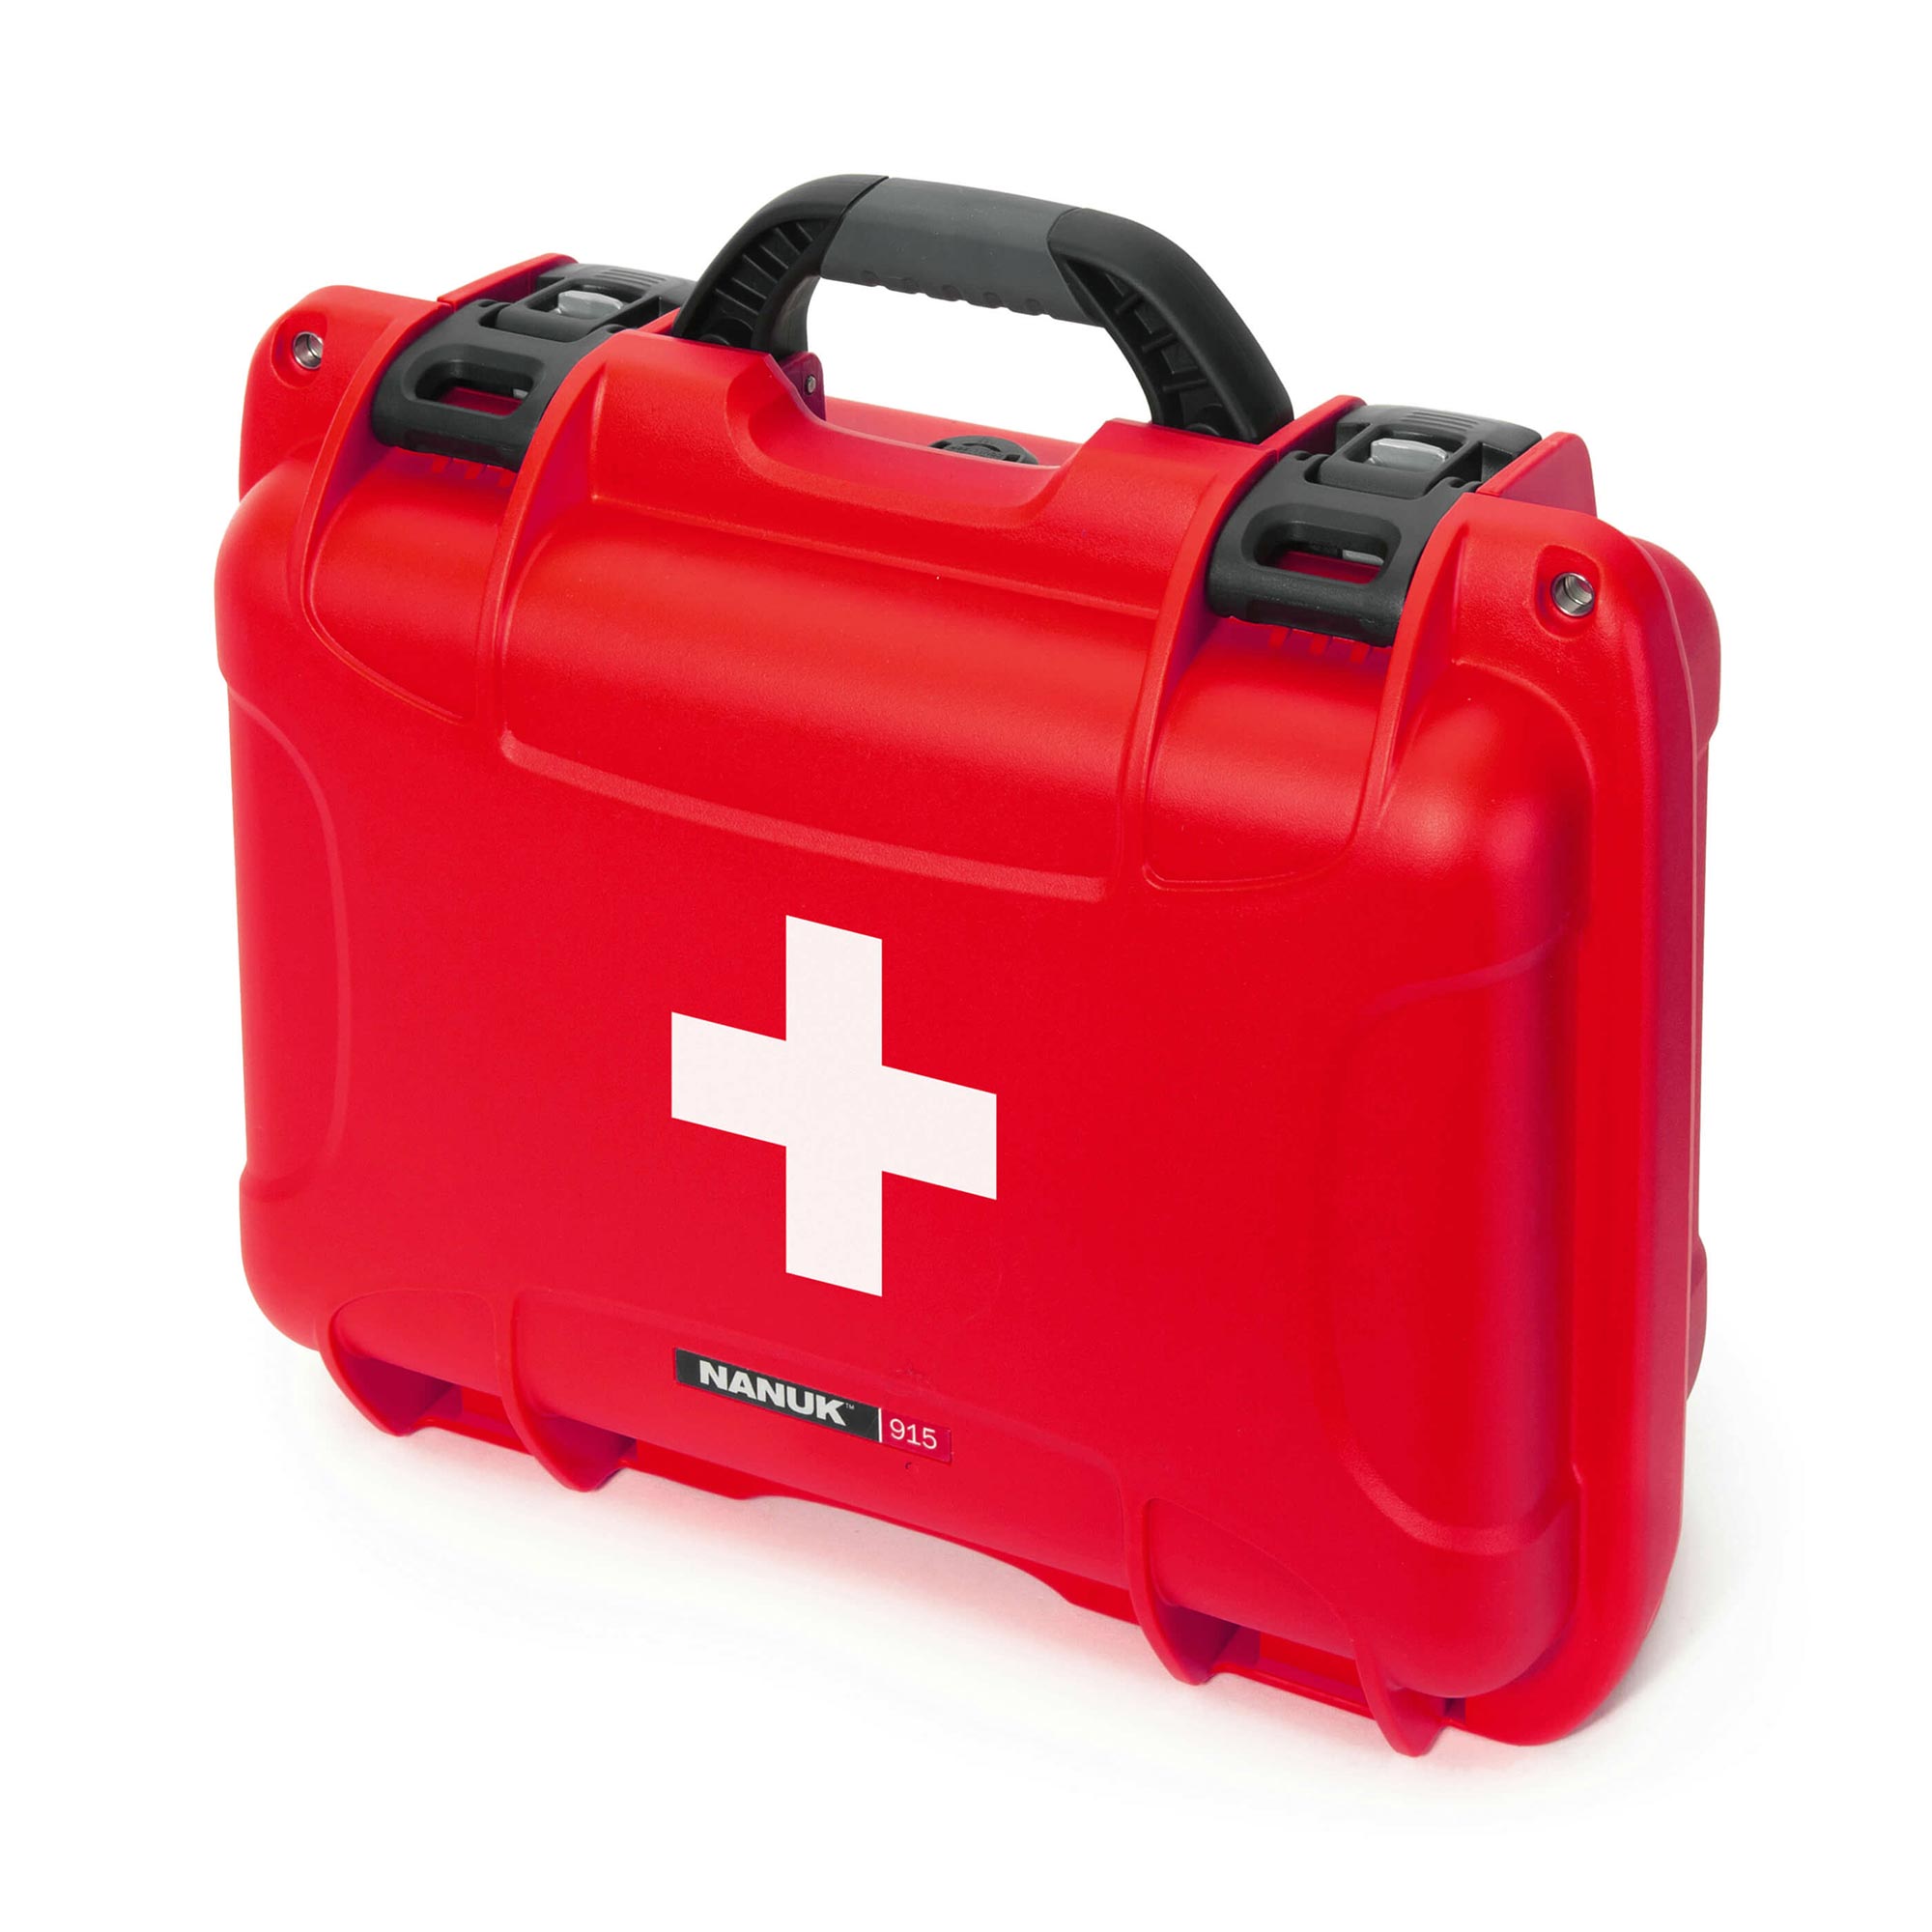 NANUK 915 First Aid valise-Outdoor Valise-Rouge-NANUK